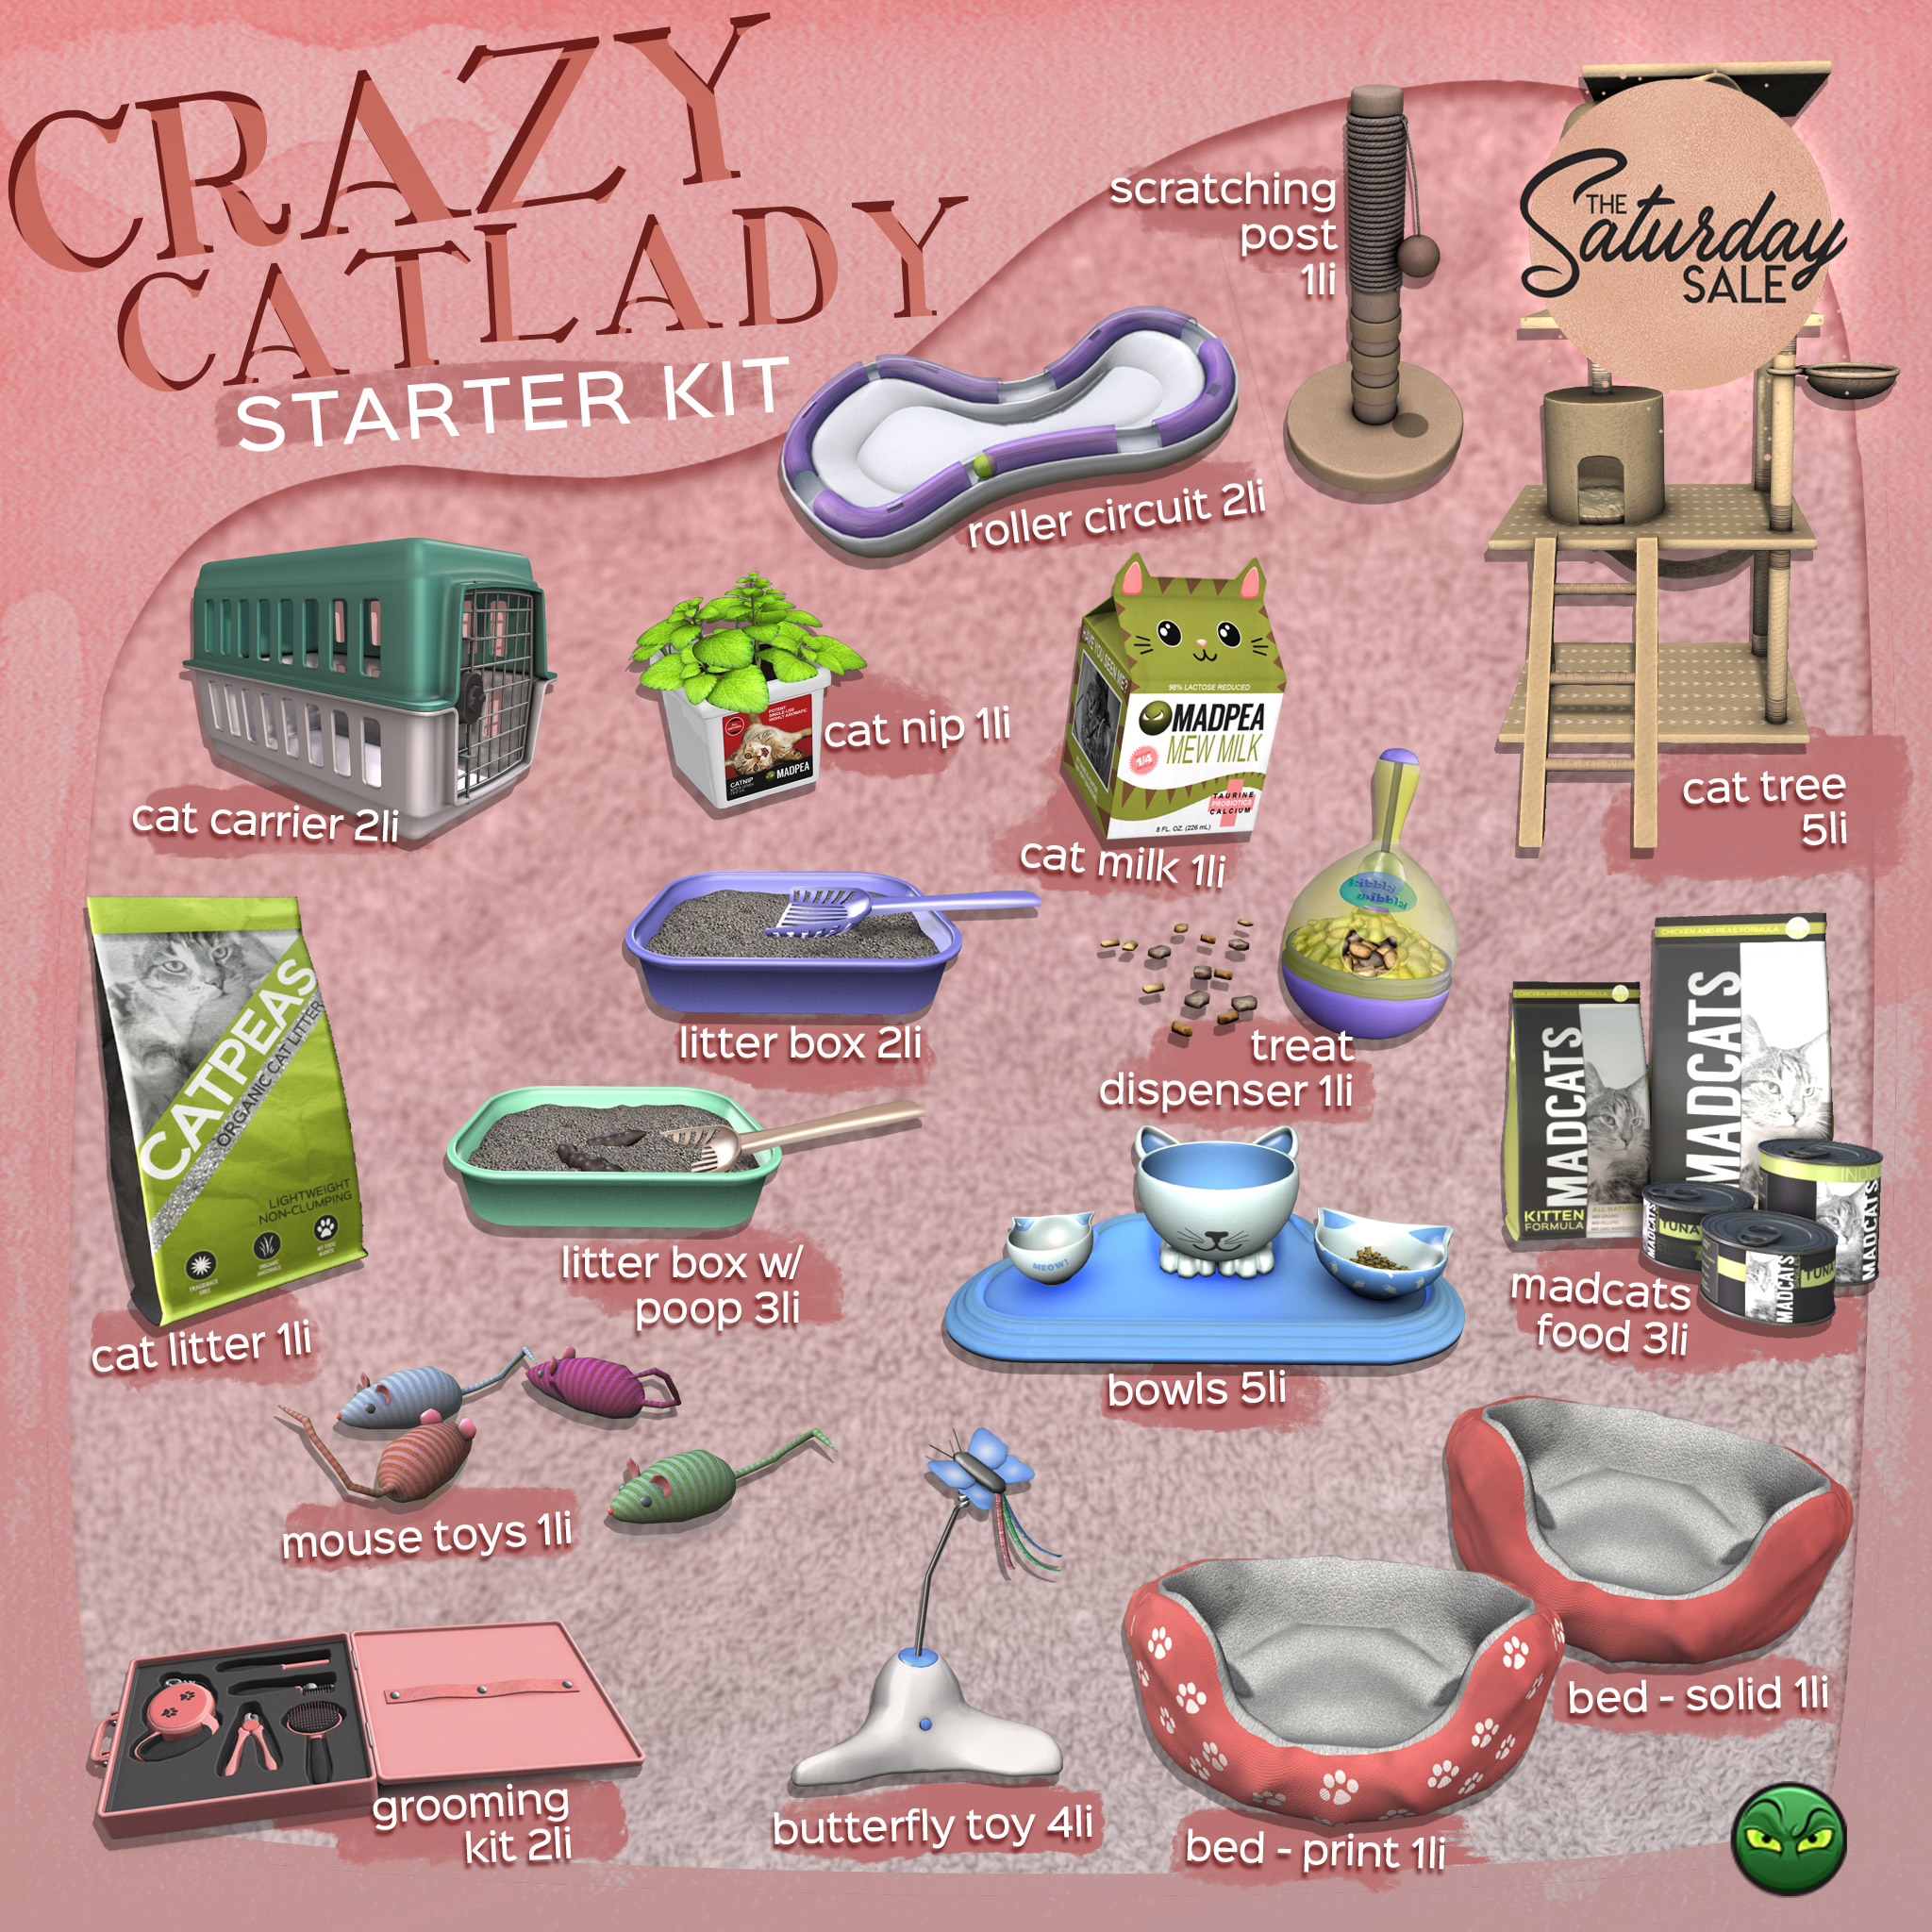 MadPea – Crazy Cat Lady Starter Kit